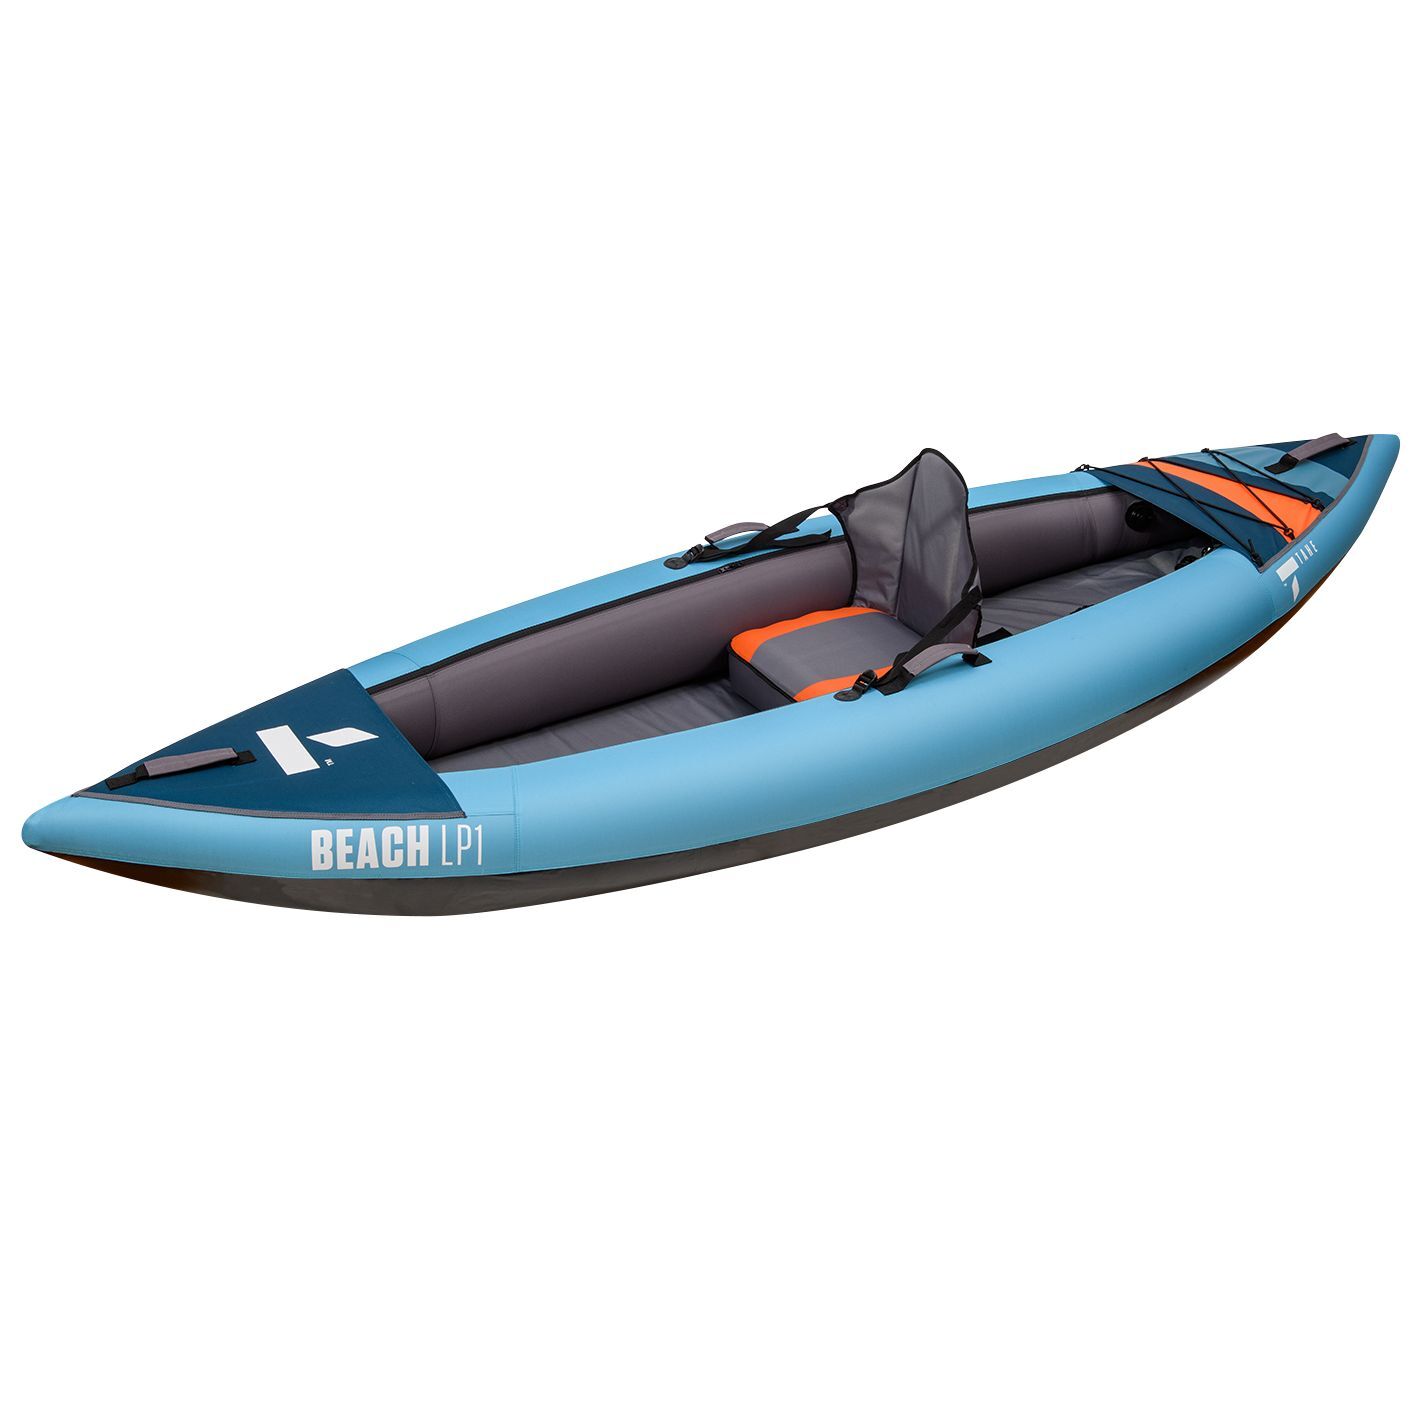 Outdoor Kayak Air Beach Lp1 Pack - Oppustelig kajak